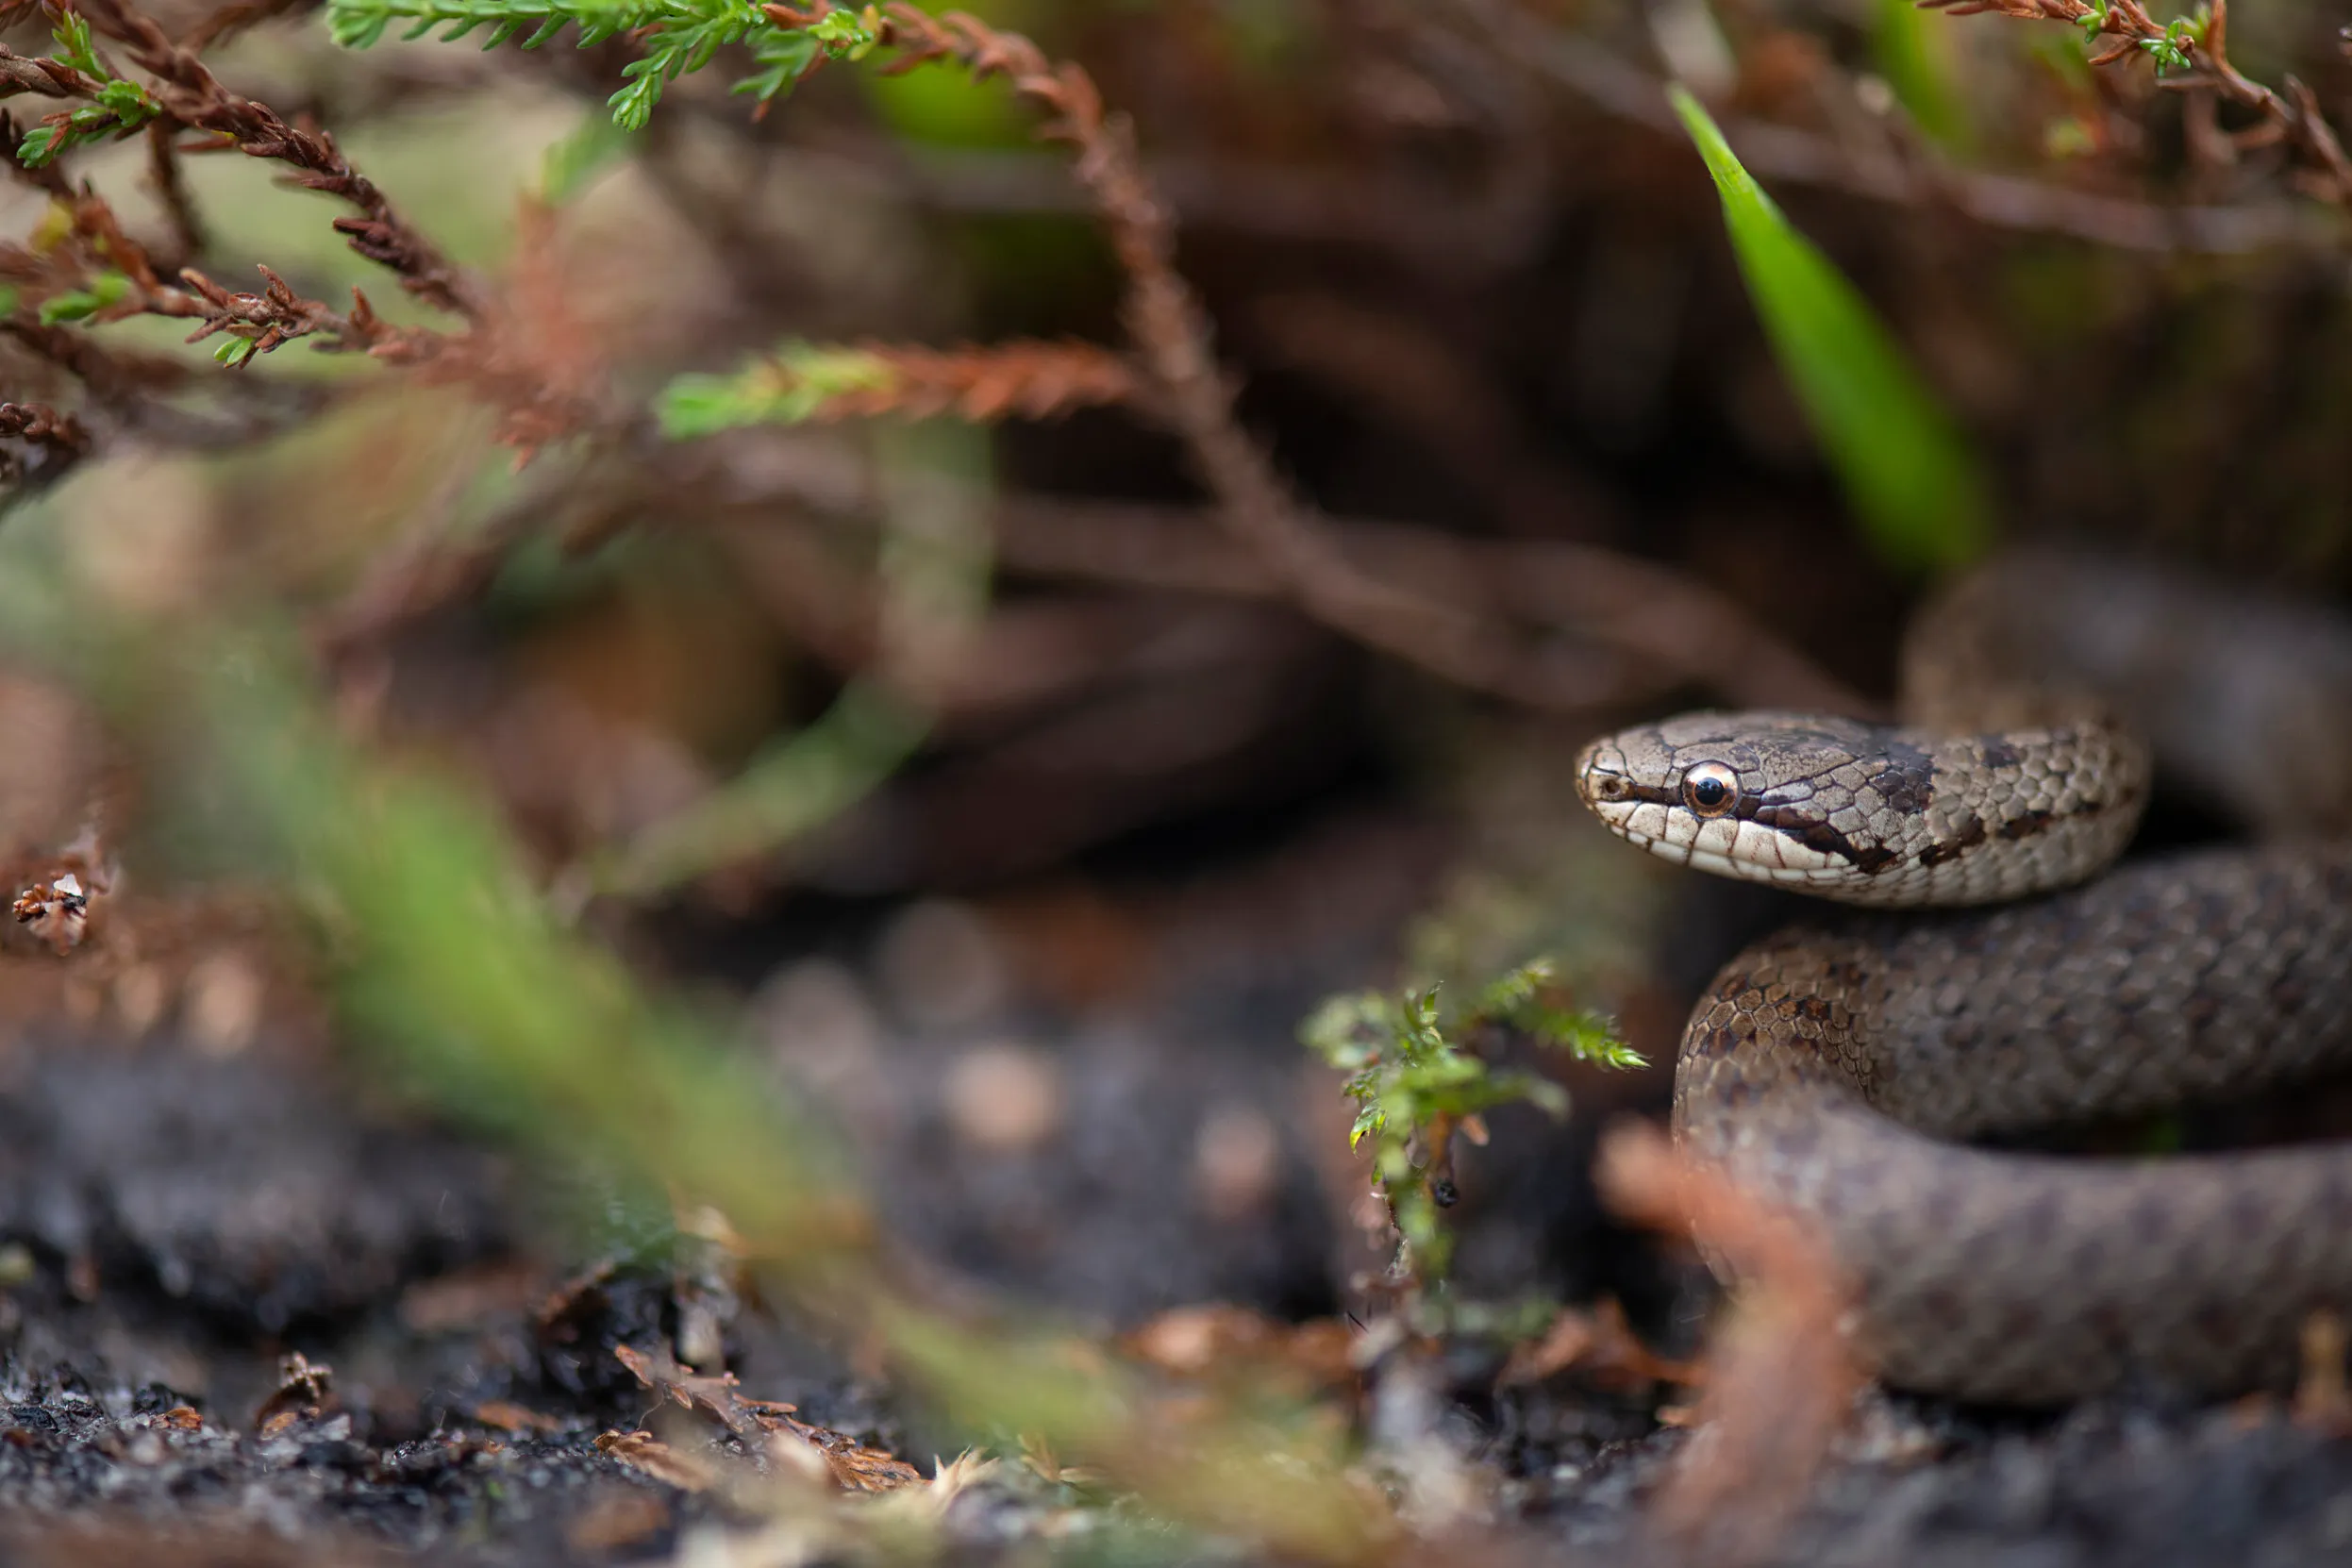 A Smooth Snake coiled up on a dirt floor underneath a log.